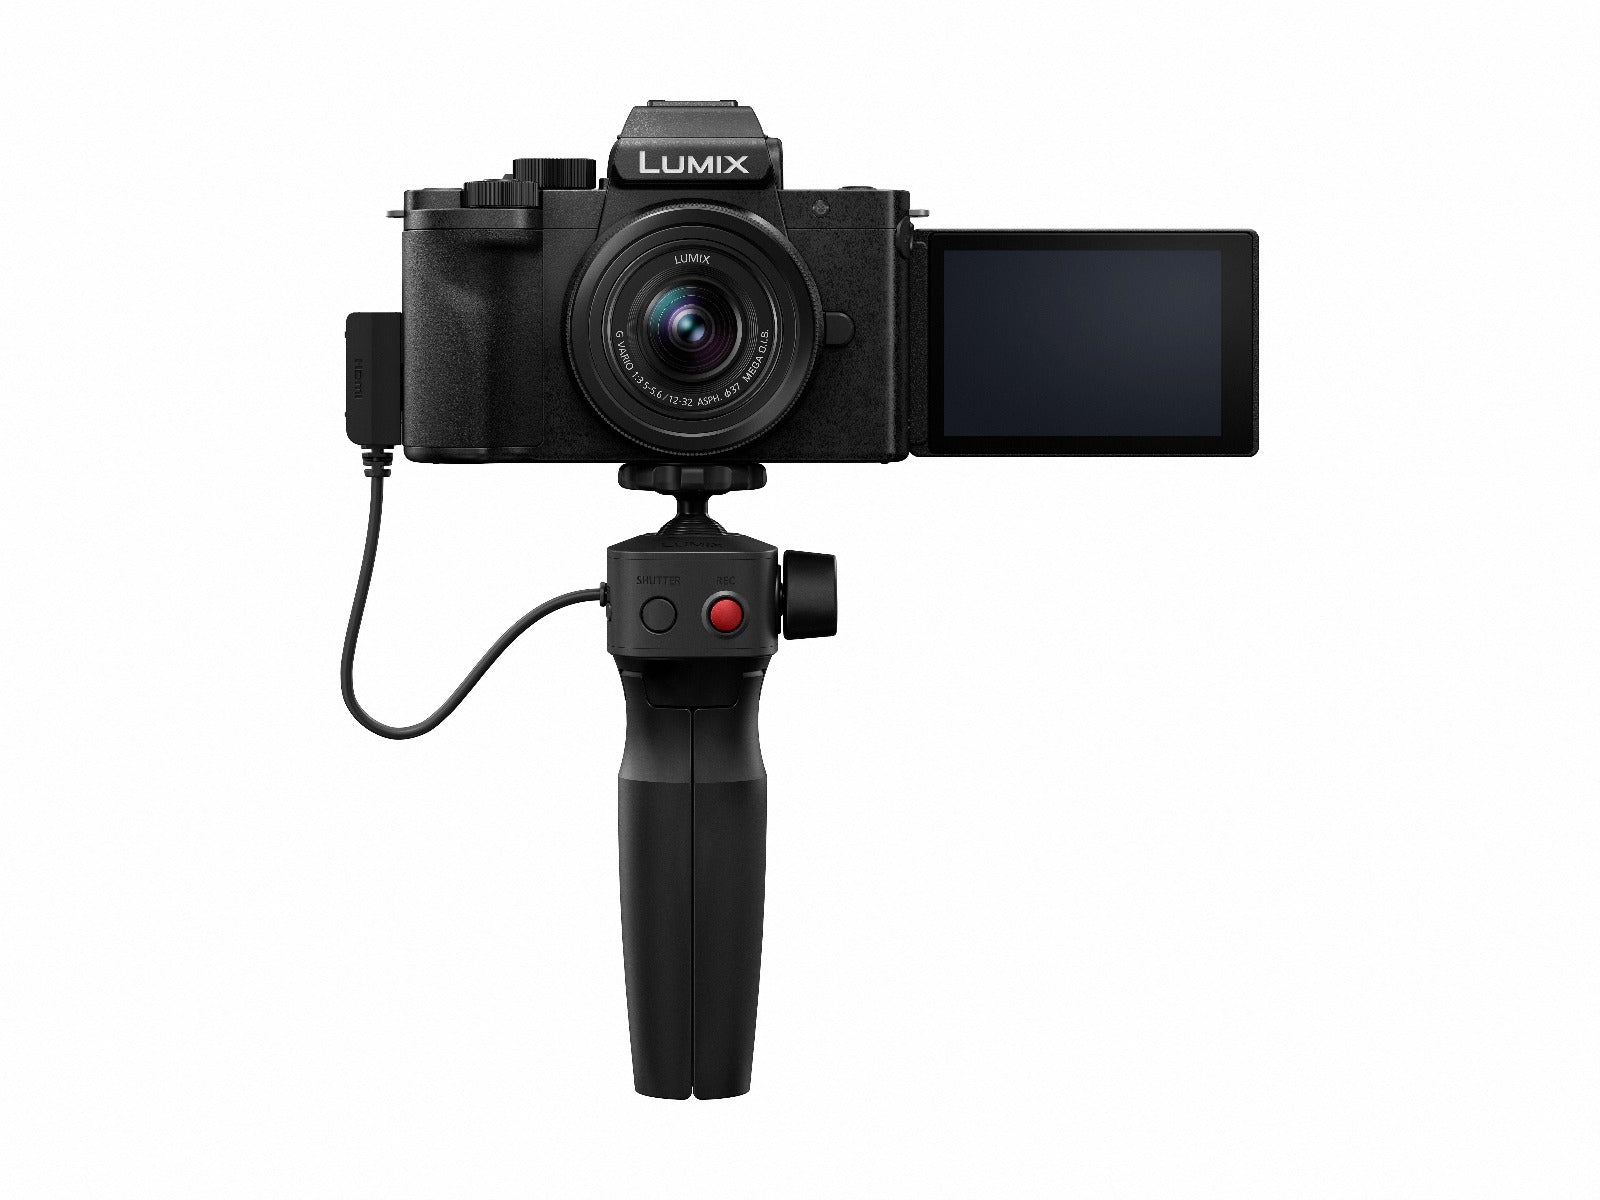 Panasonic Lumix G100 4K Mirrorless Camera With Bluetooth Tripod Grip  12-32mm Lens DC-G100VGW-K Price, Offers in India + Cashback